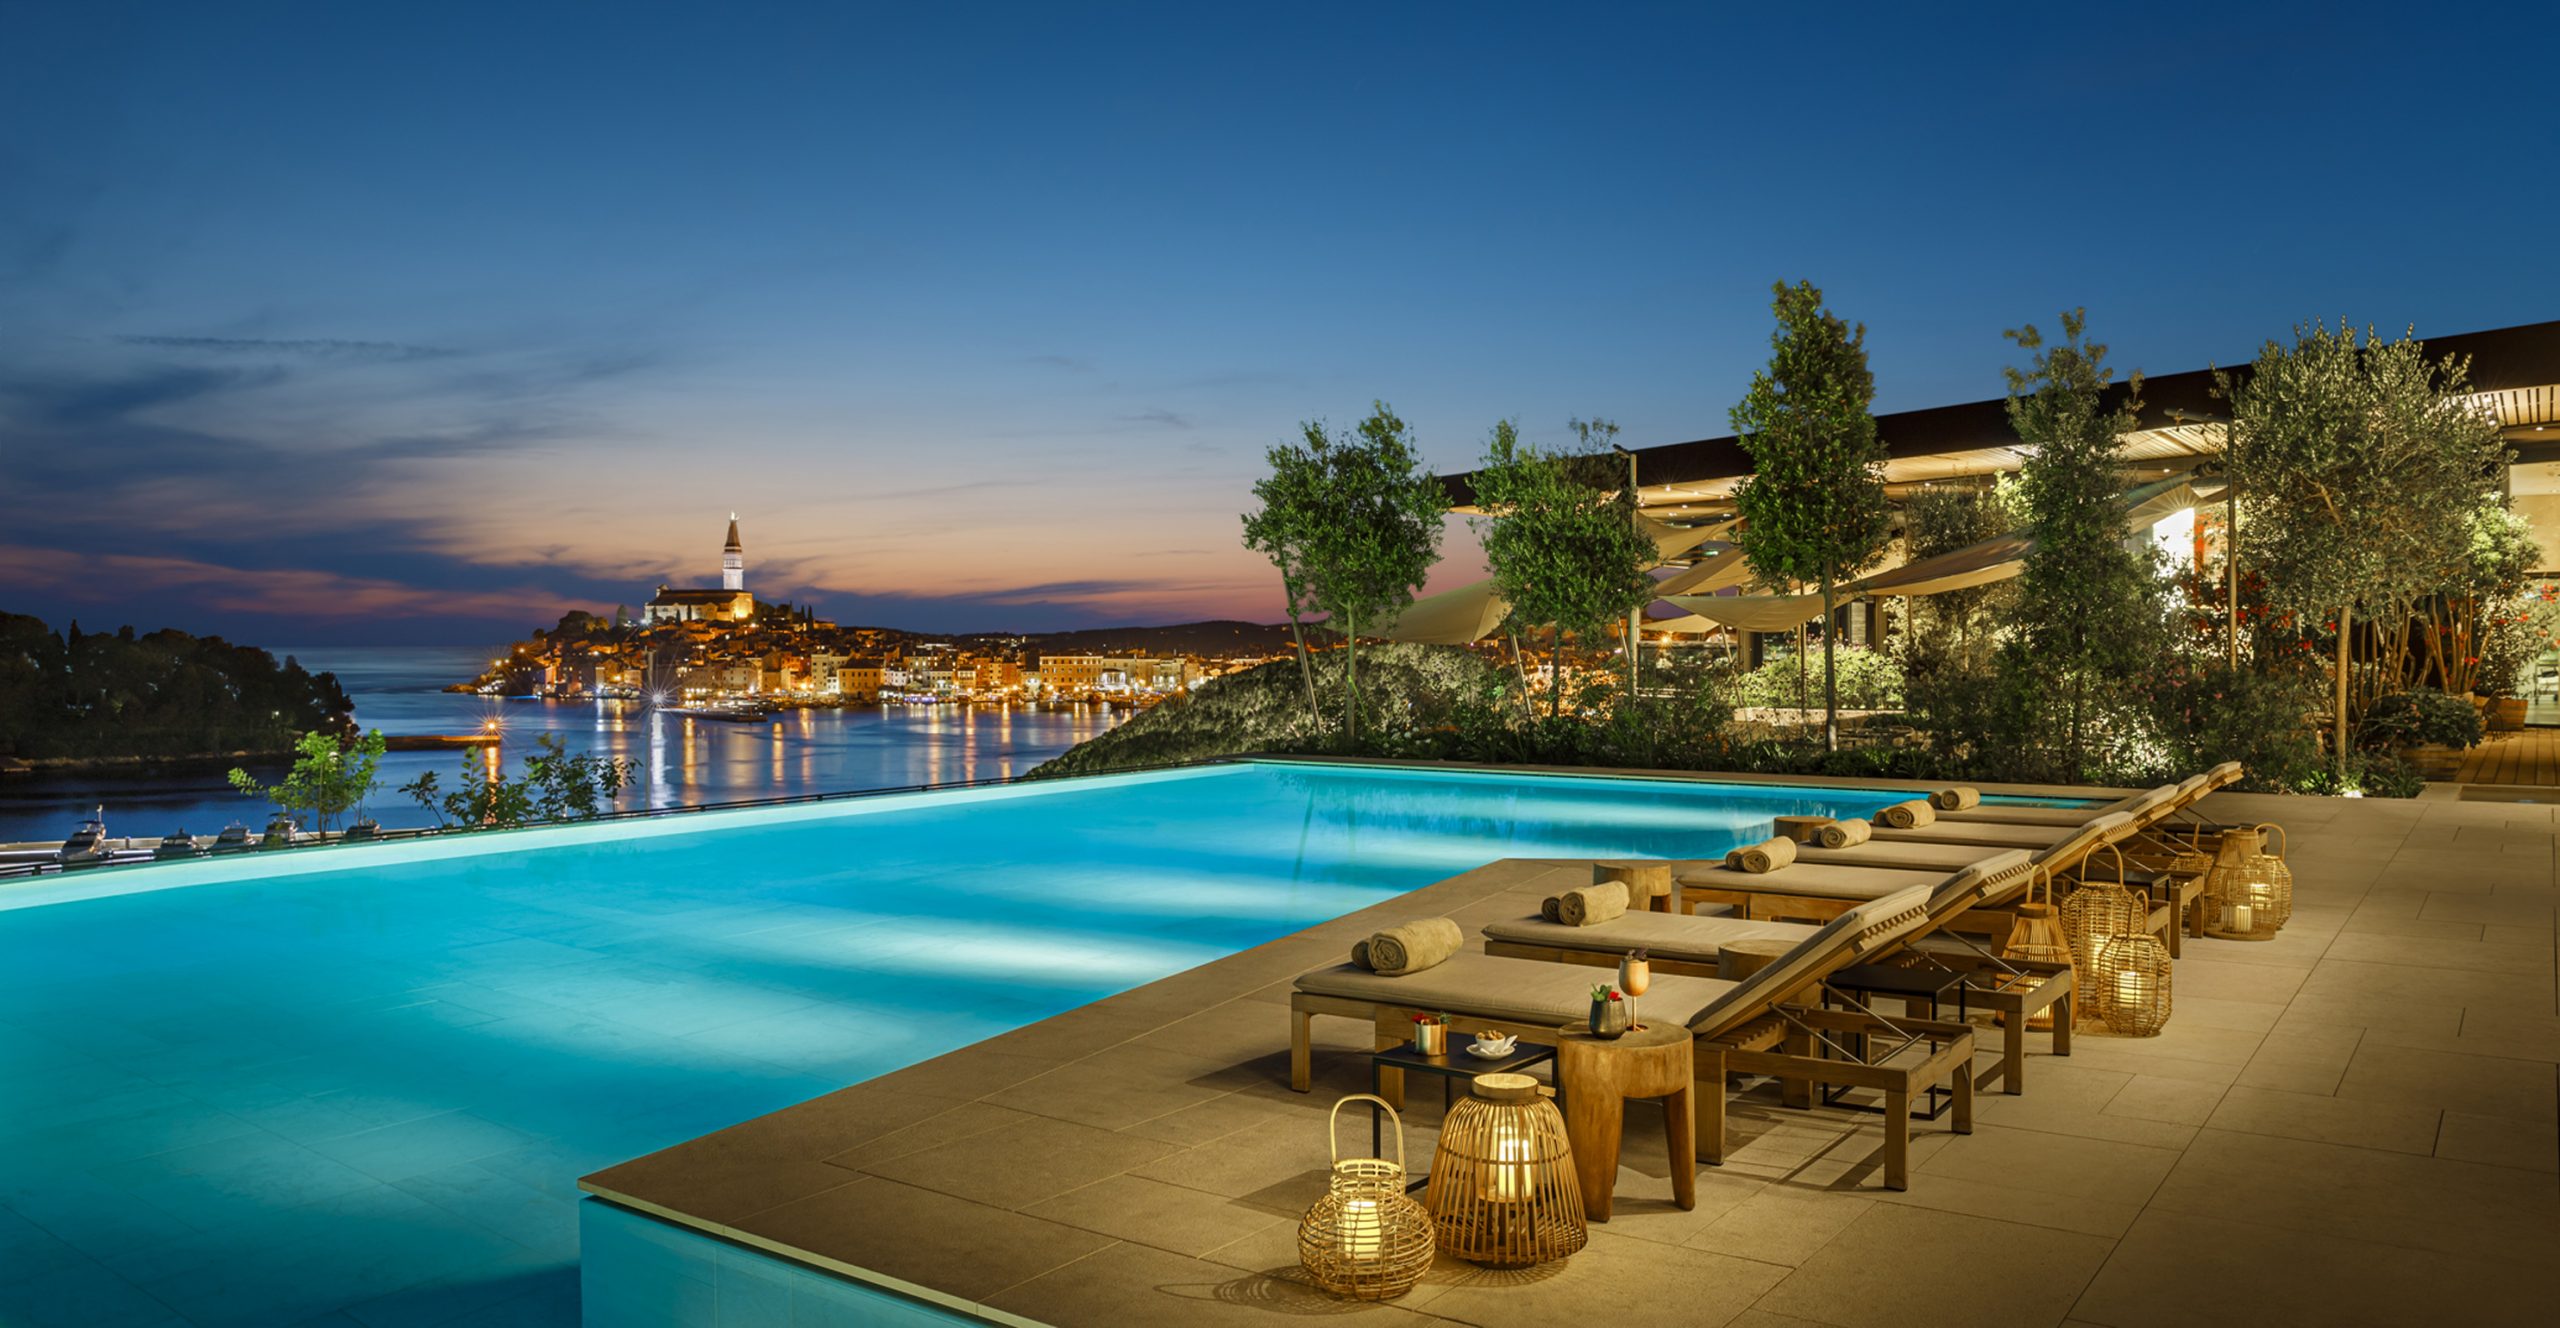 Grand Park Hotel in Rovinj wins Hotel Property Award 2020 | Croatia Week